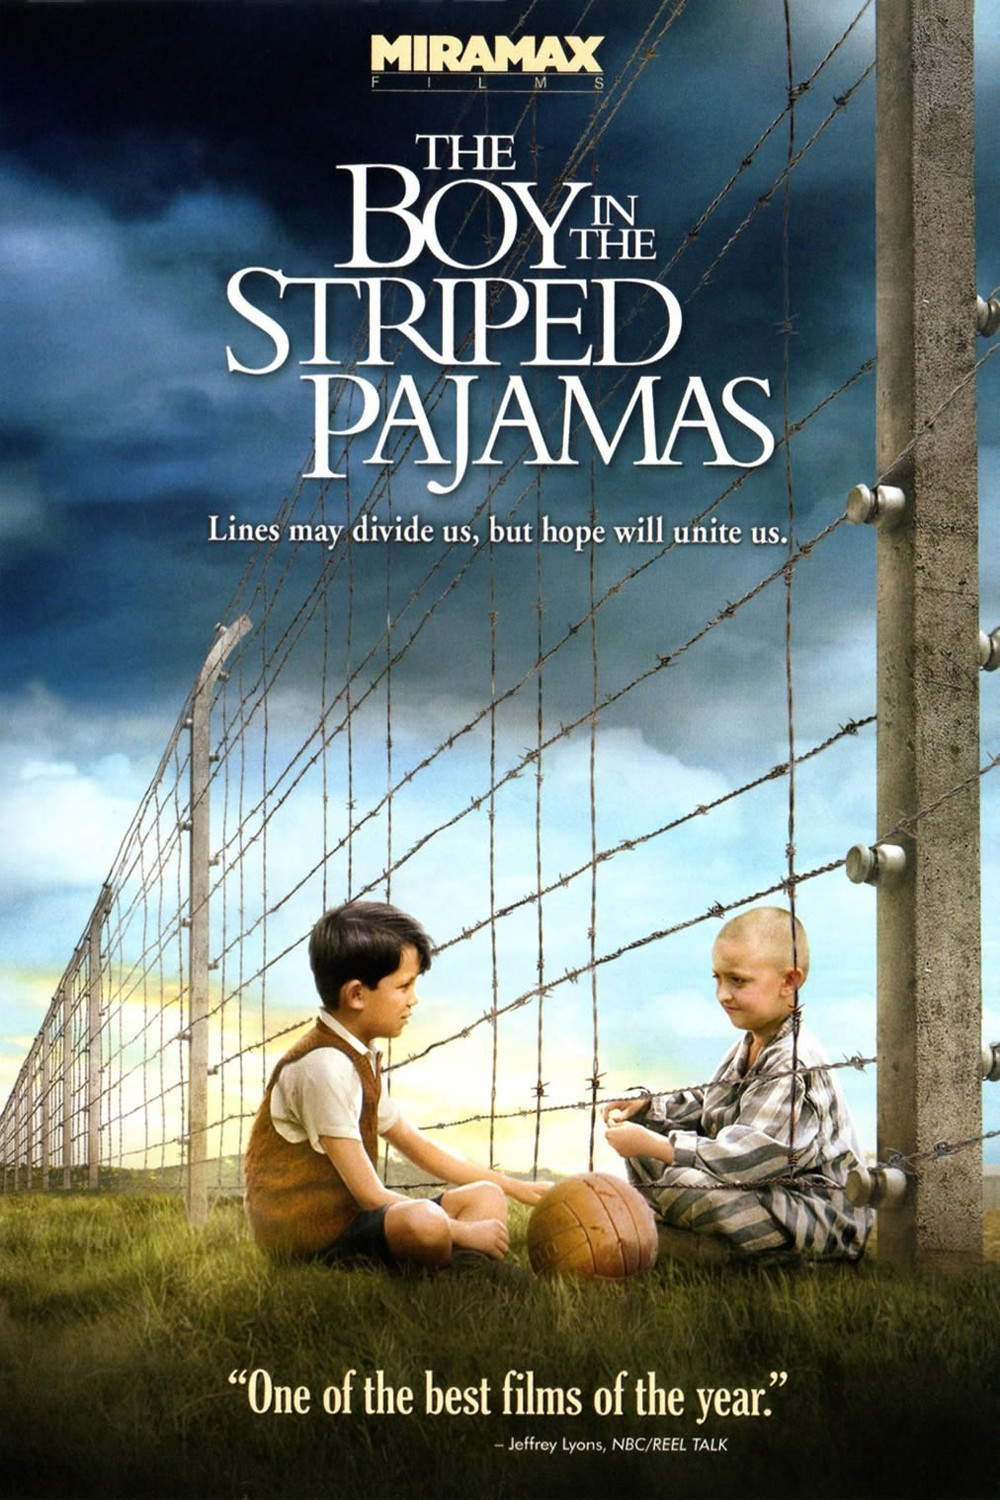 The Boy in the Striped Pyjamas: A child's awakening